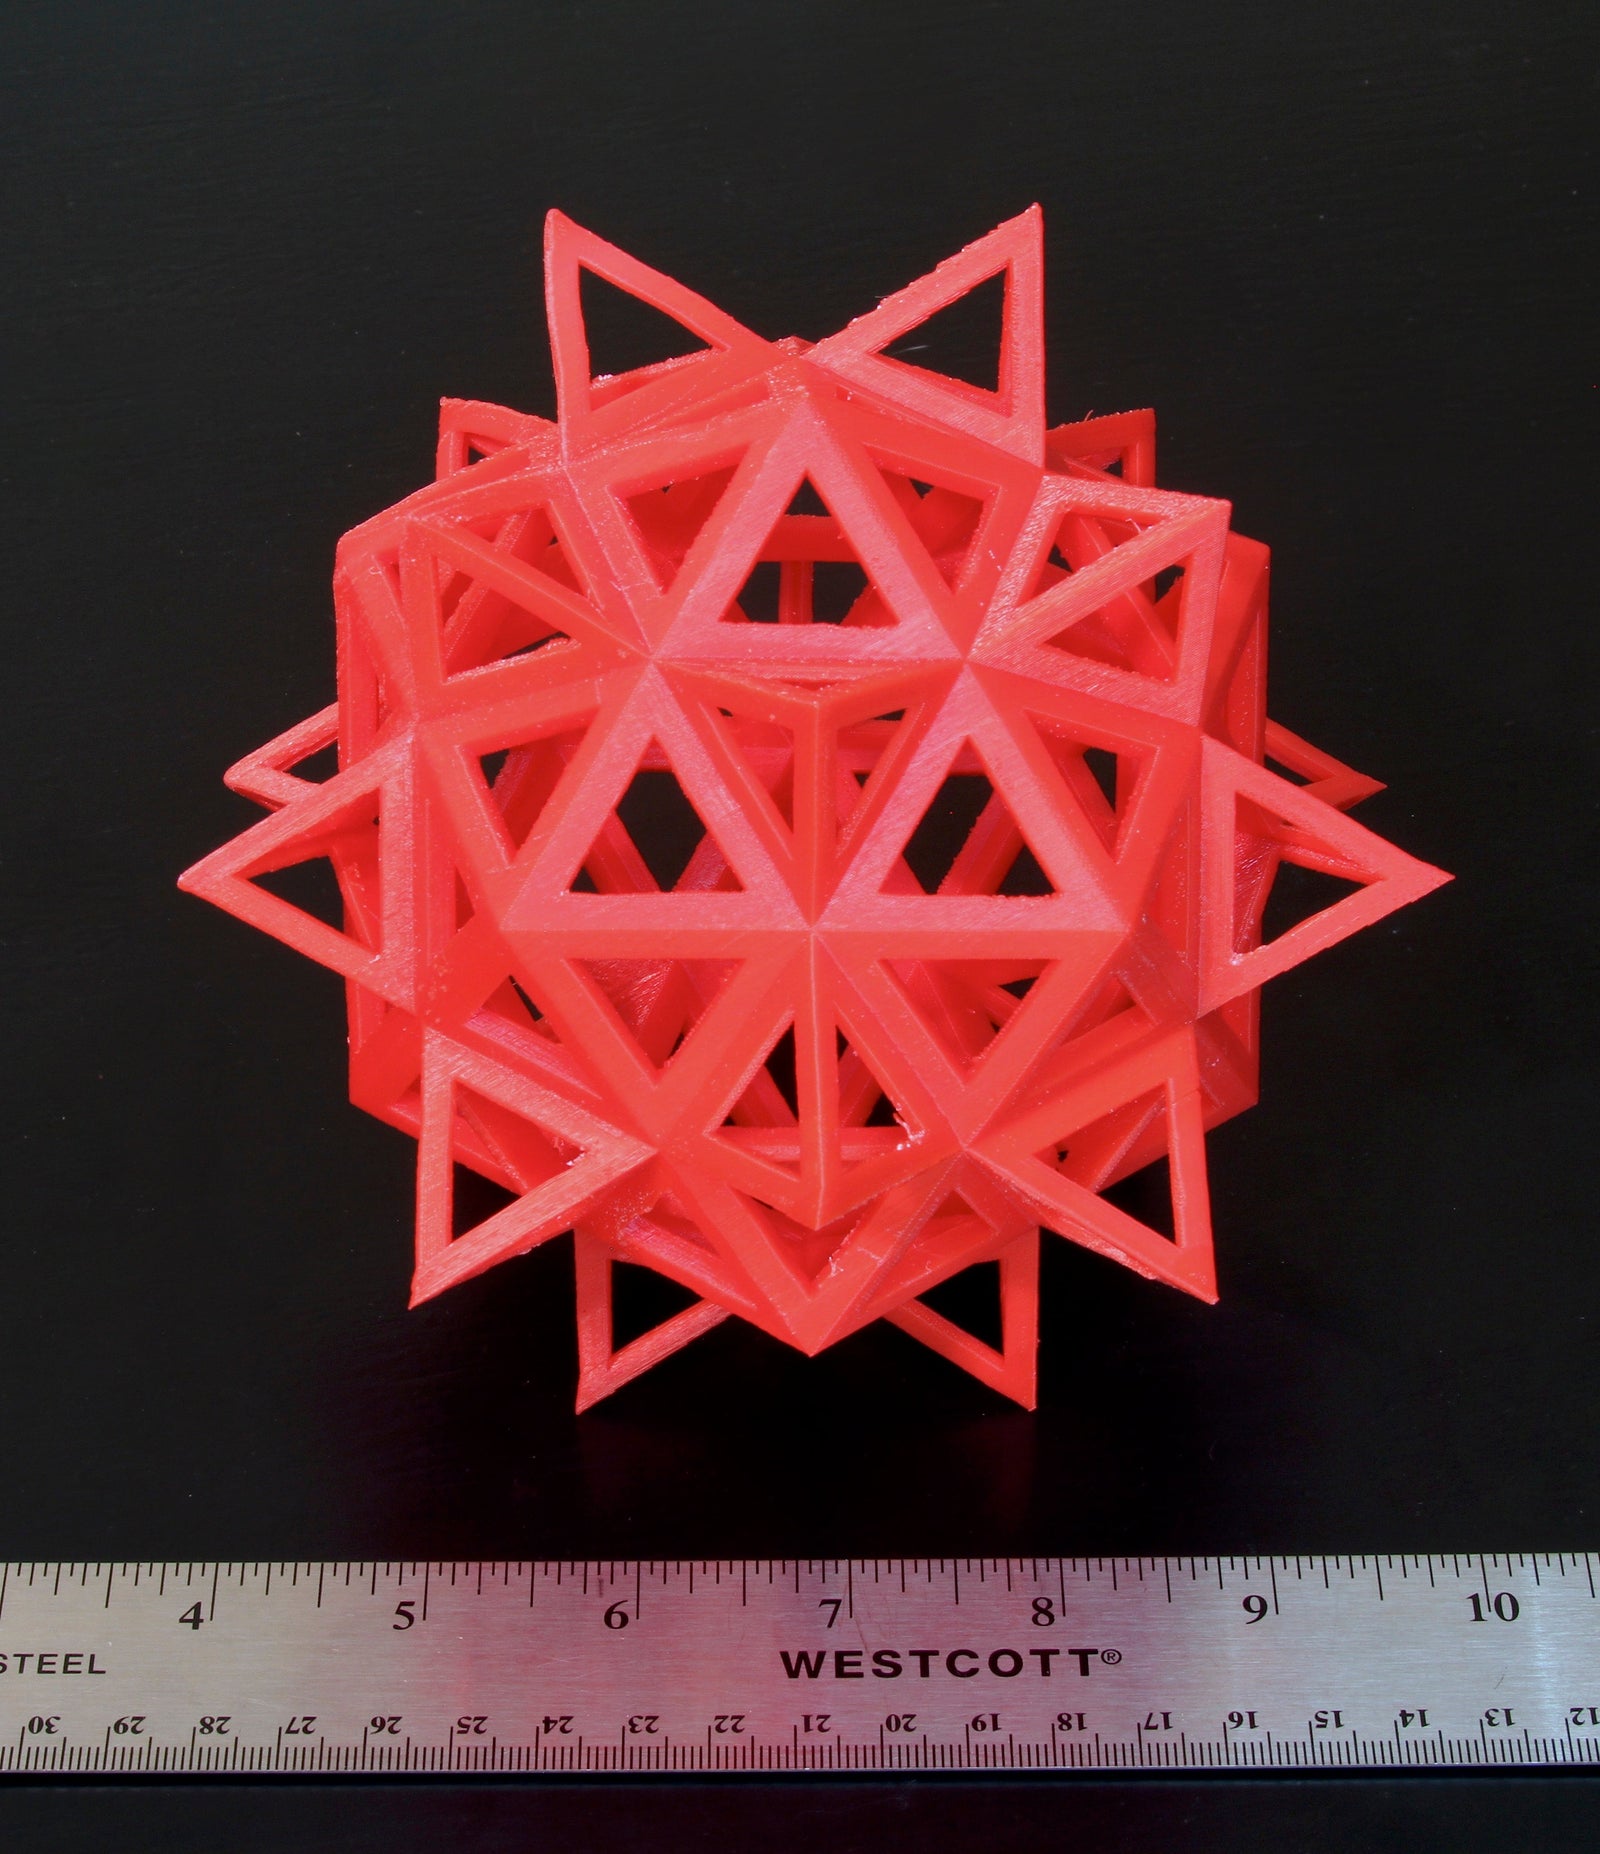 3D Printed Polyhedron by Leonardo da Vinci